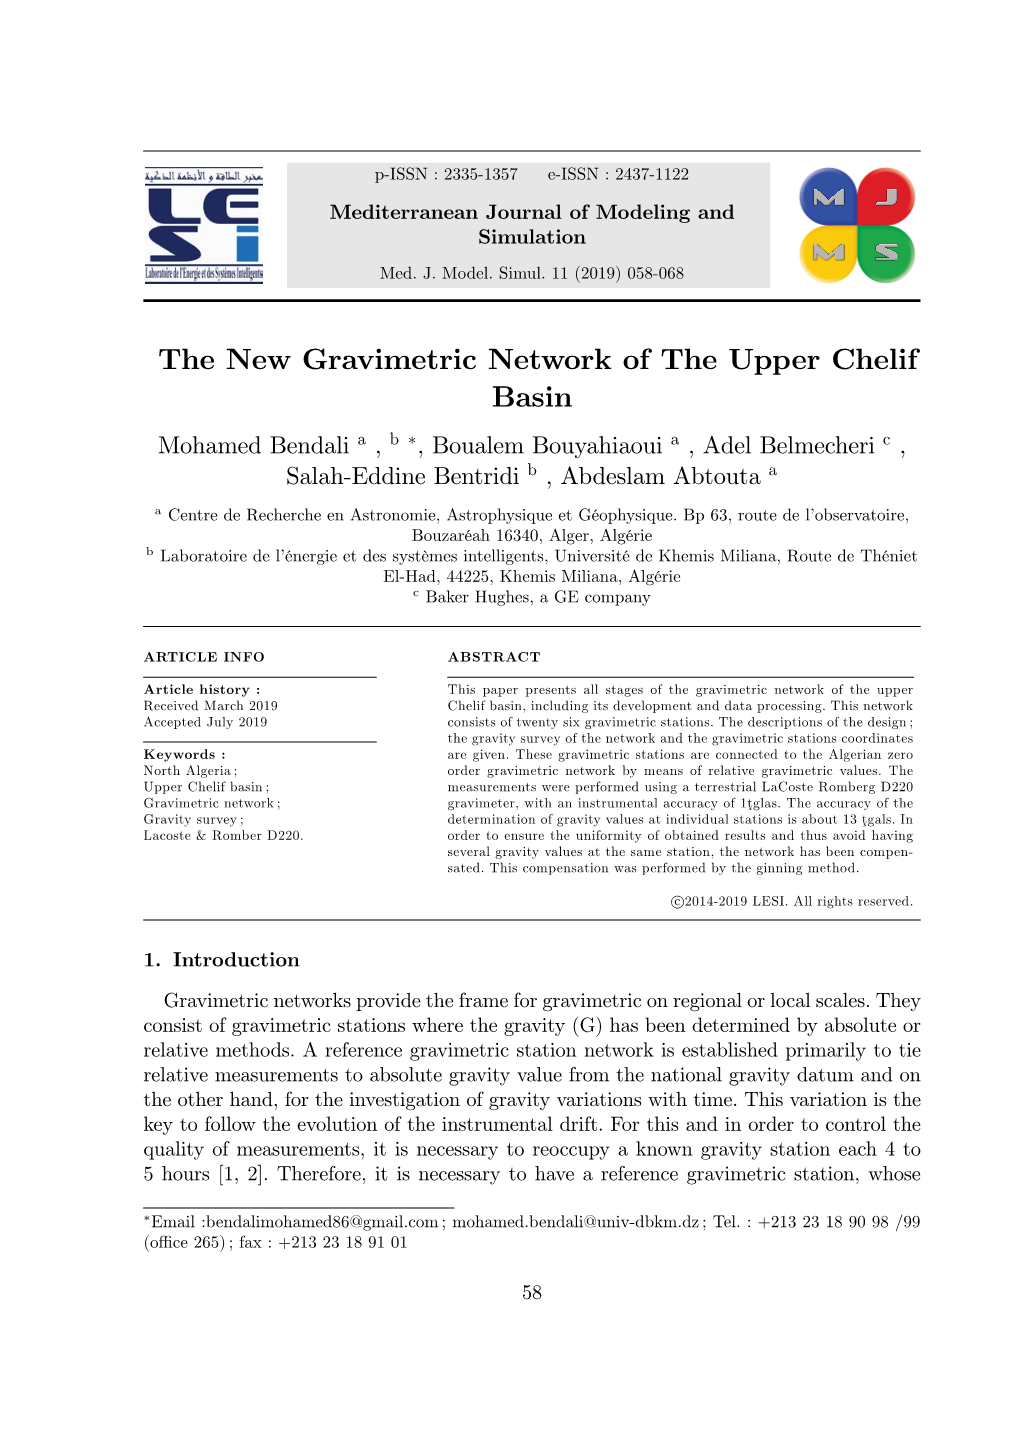 The New Gravimetric Network of the Upper Chelif Basin